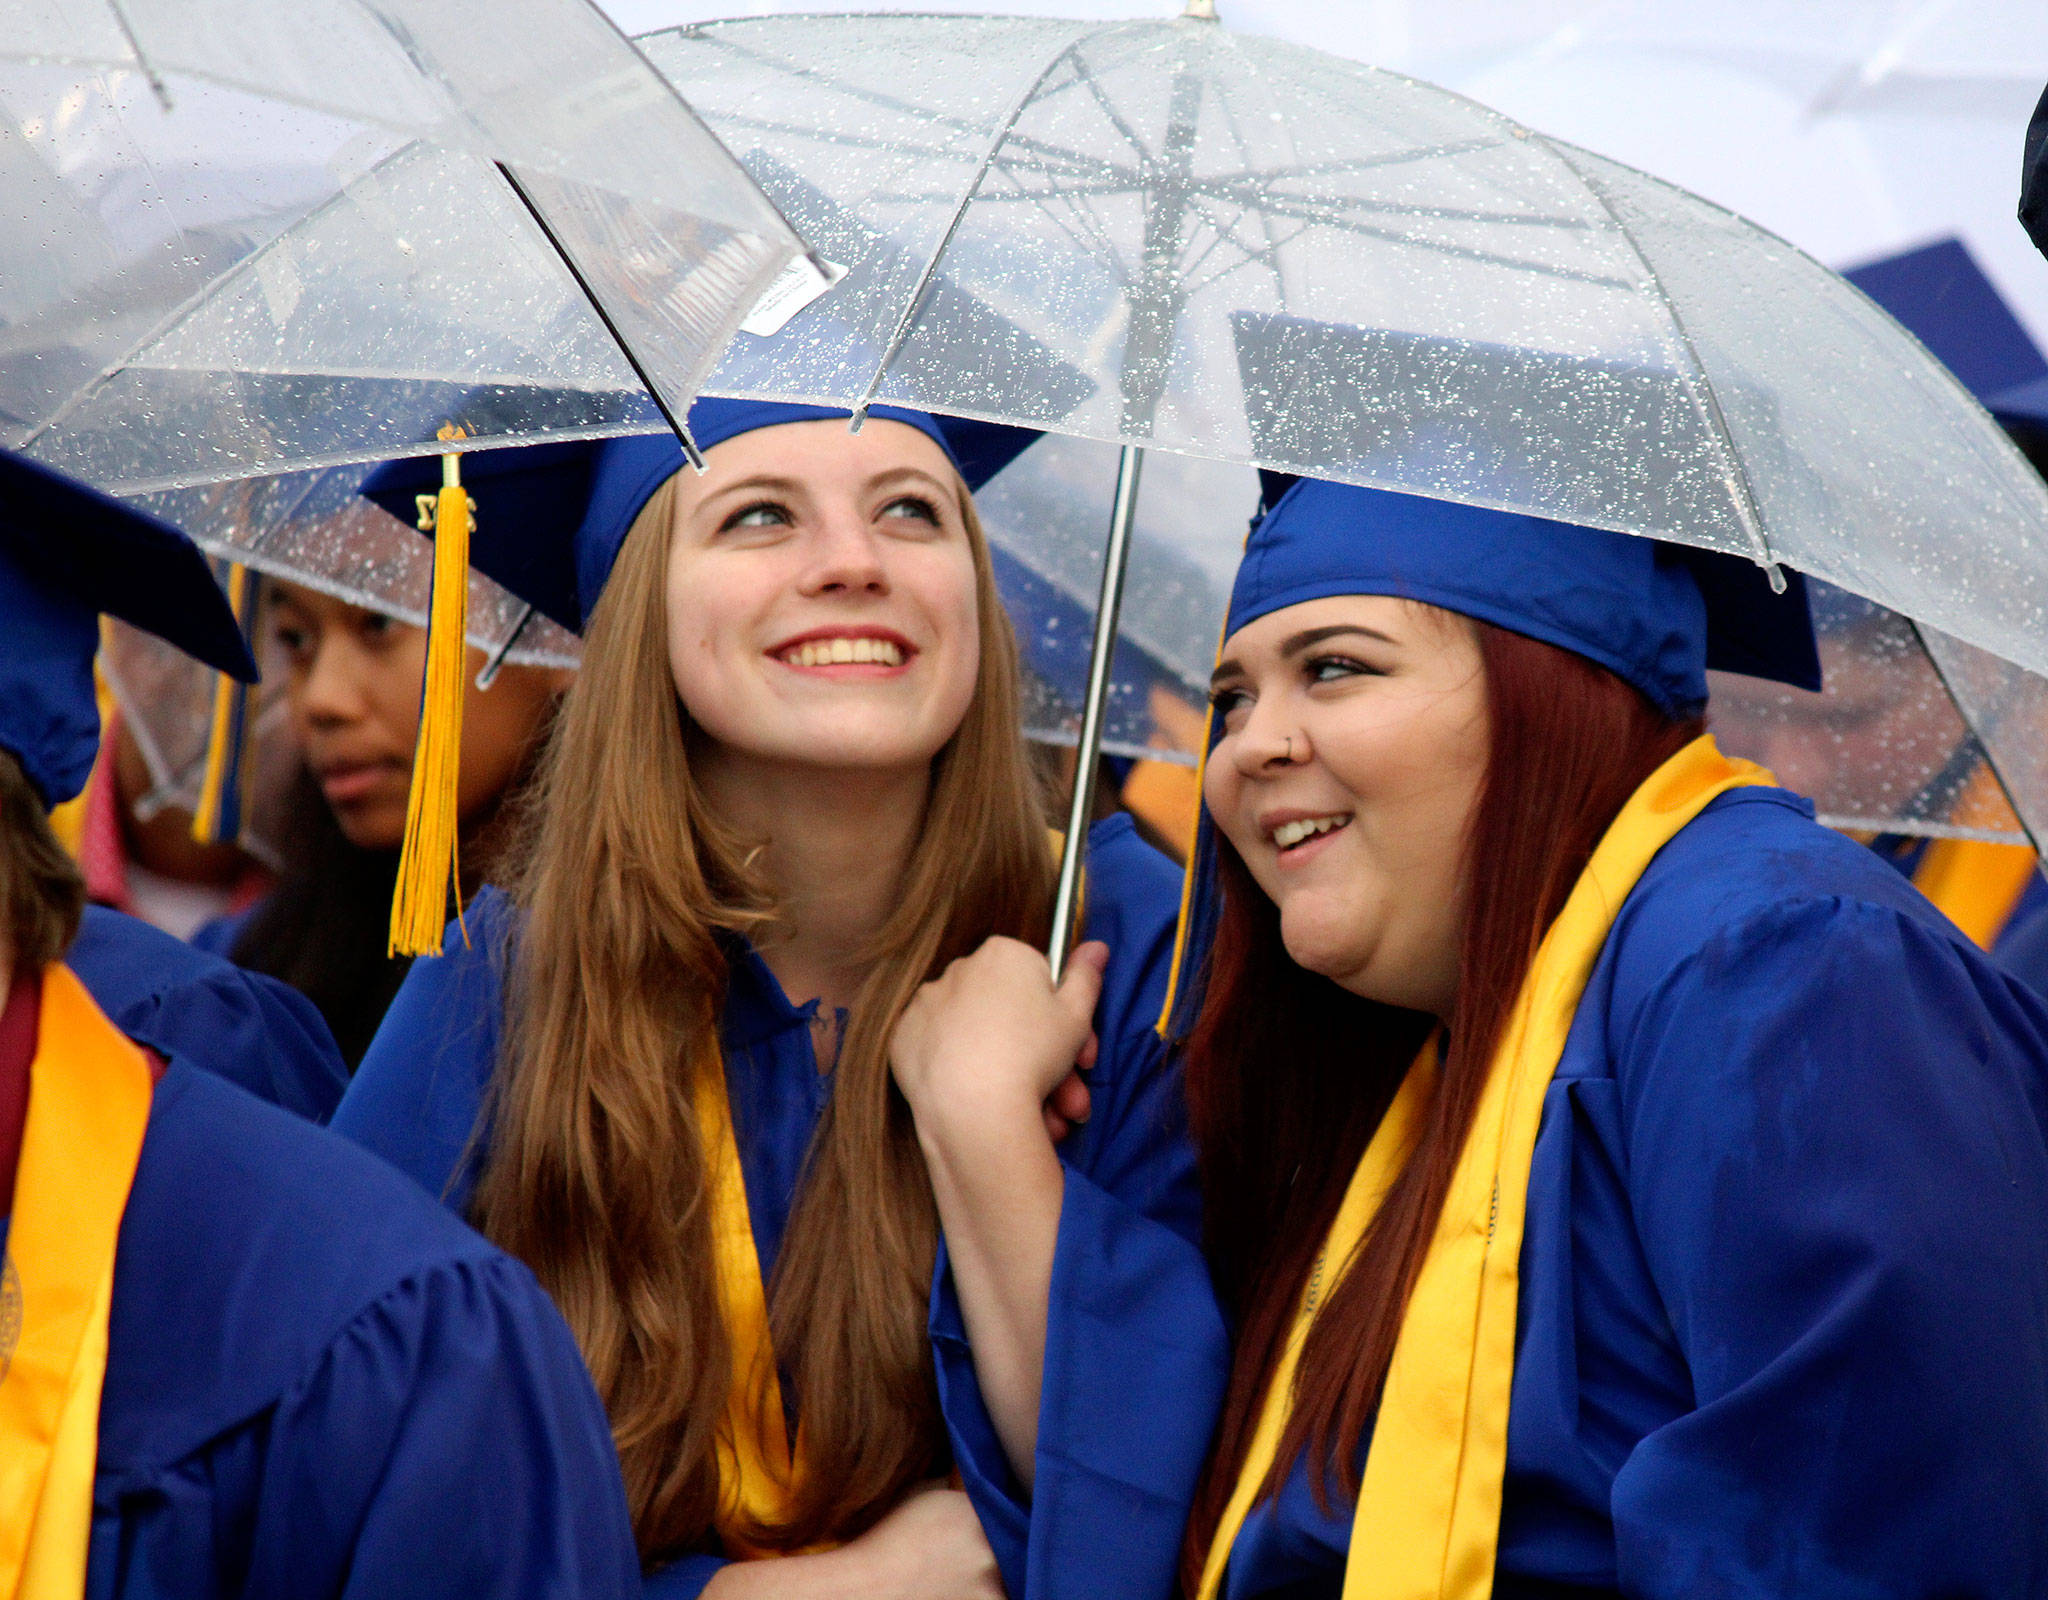 Rain can’t put a damper on Bremerton High School’s graduation ceremony